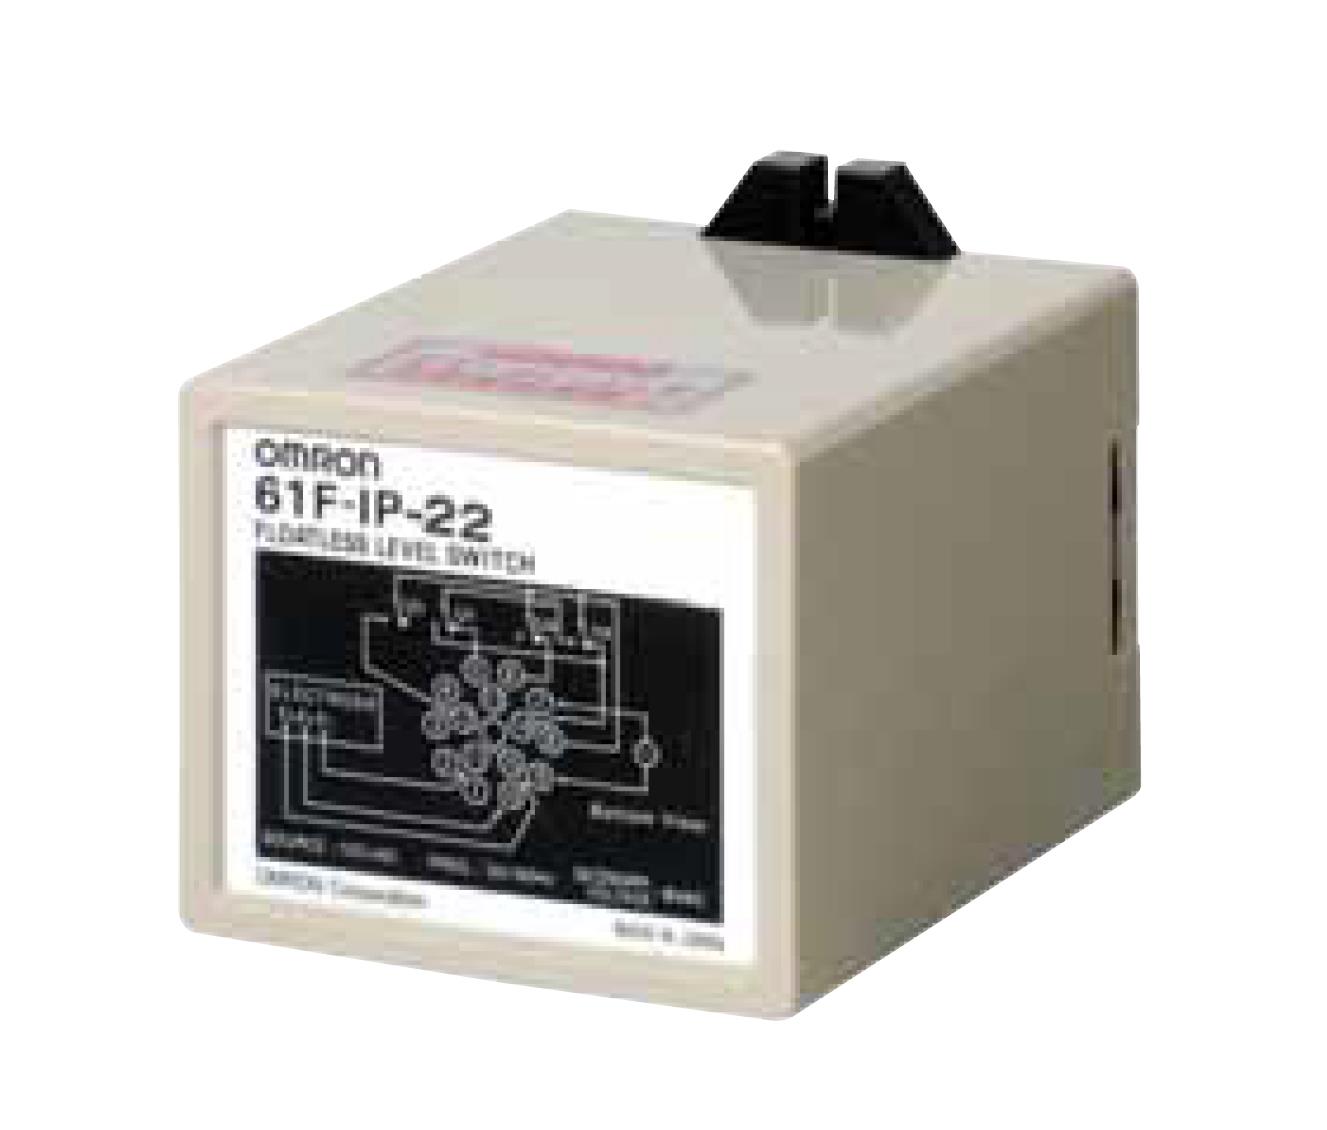 61F-IP-22 AC200可根据用途选择传感器探头种类传感器前置放大器-放大 器之间采用耐弯曲电缆
欧姆龙耐热型启动水槽报警装置